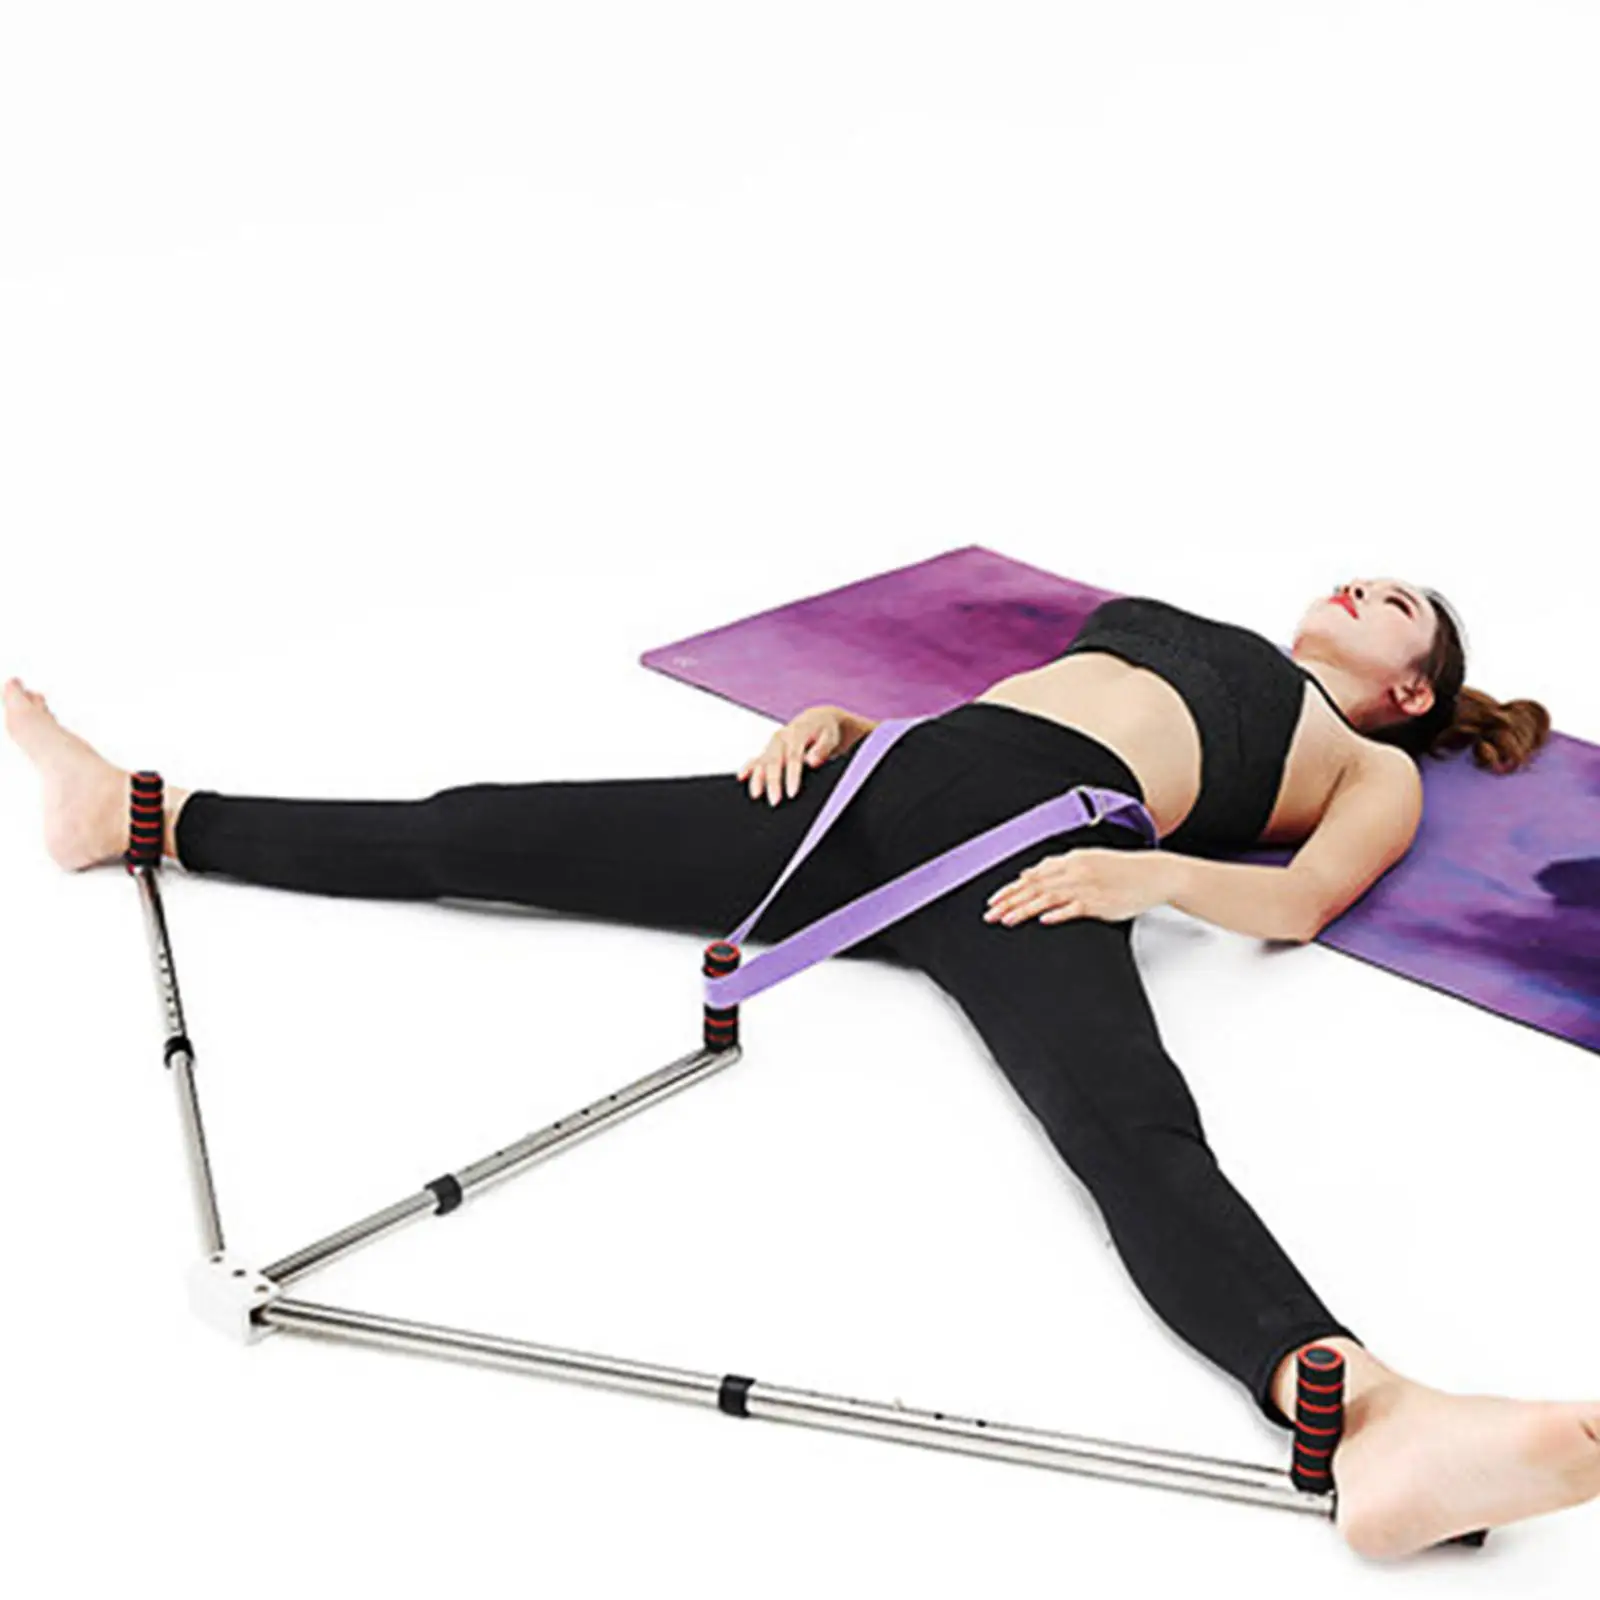 3 Bar Leg Stretcher Hamstring Stretcher Device Stainless Steel Equipment Adjustable for Dance Exercise Ballet Gymnastics Yoga